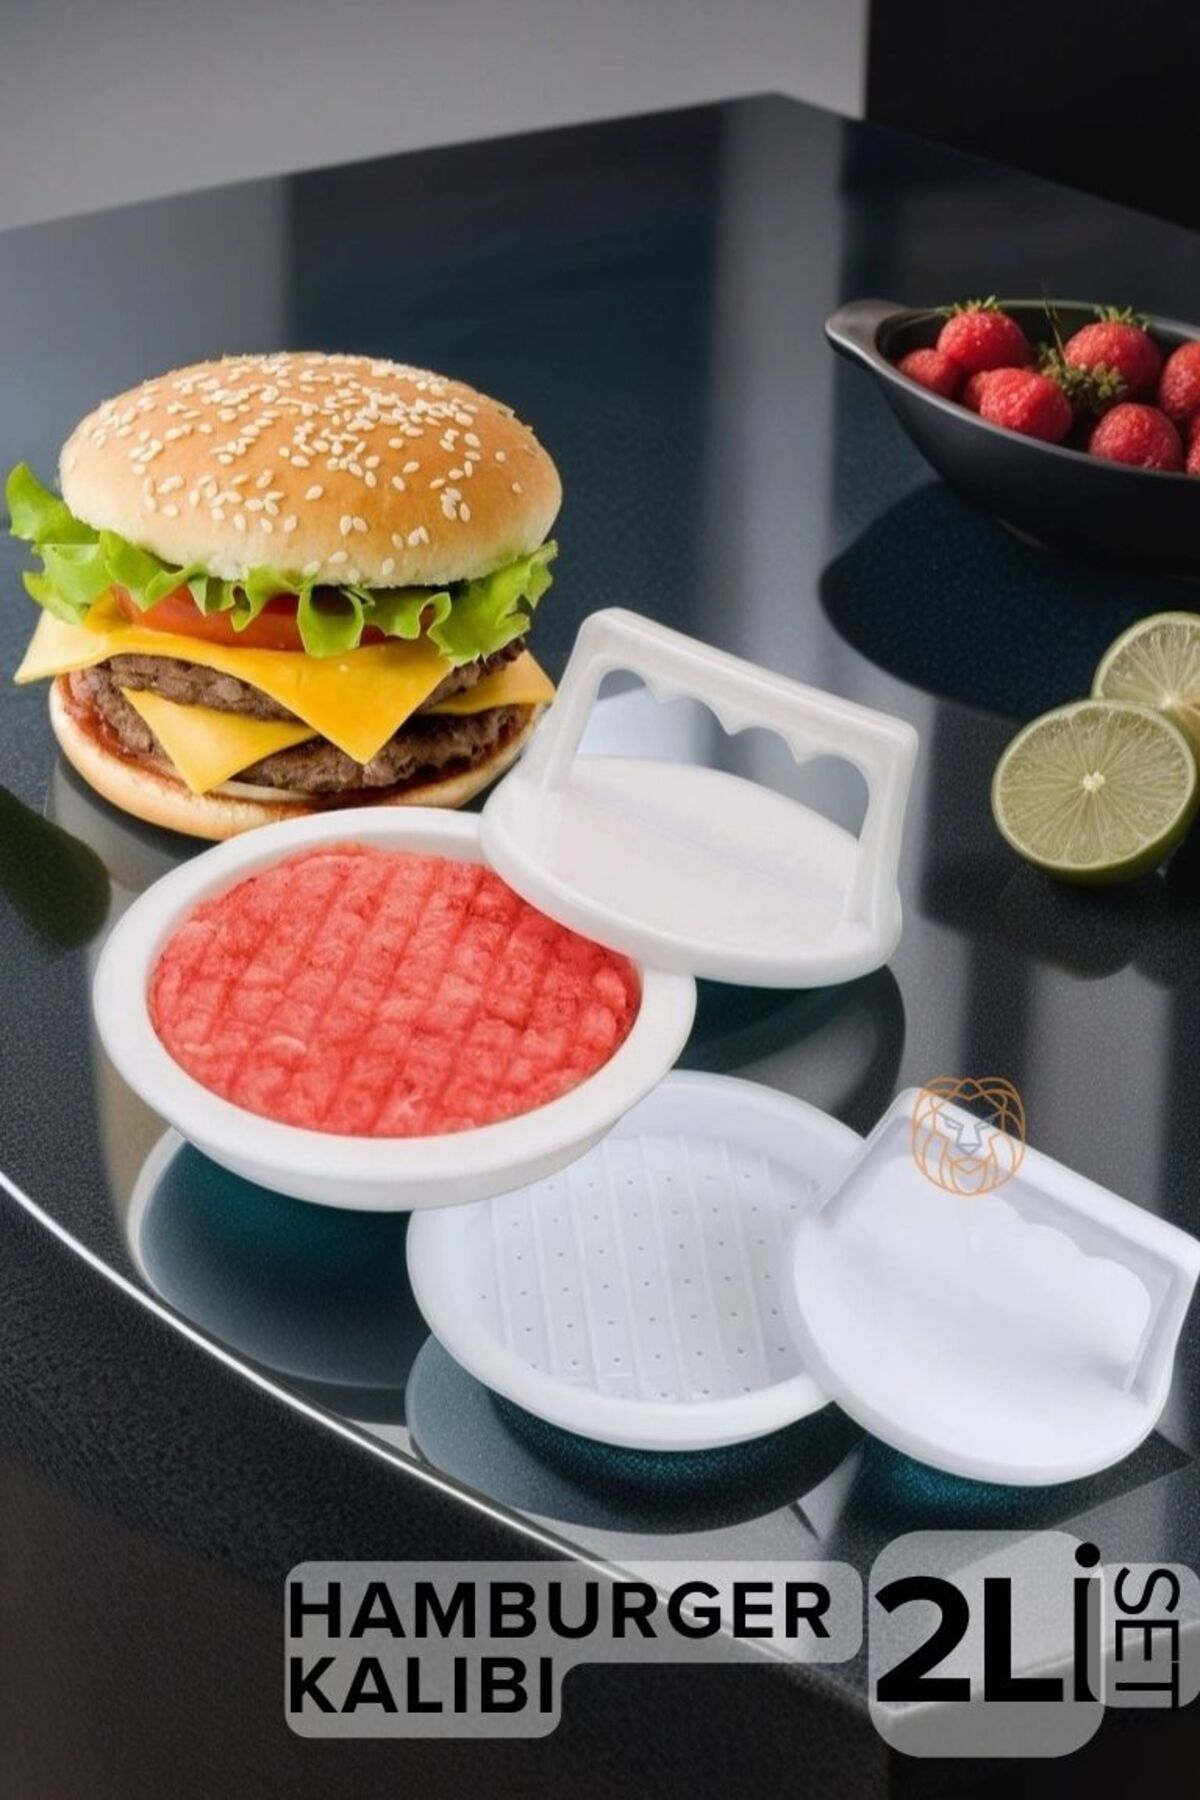 Transformacion Hamburger Kalıbı 2 li SET Esquivel Design